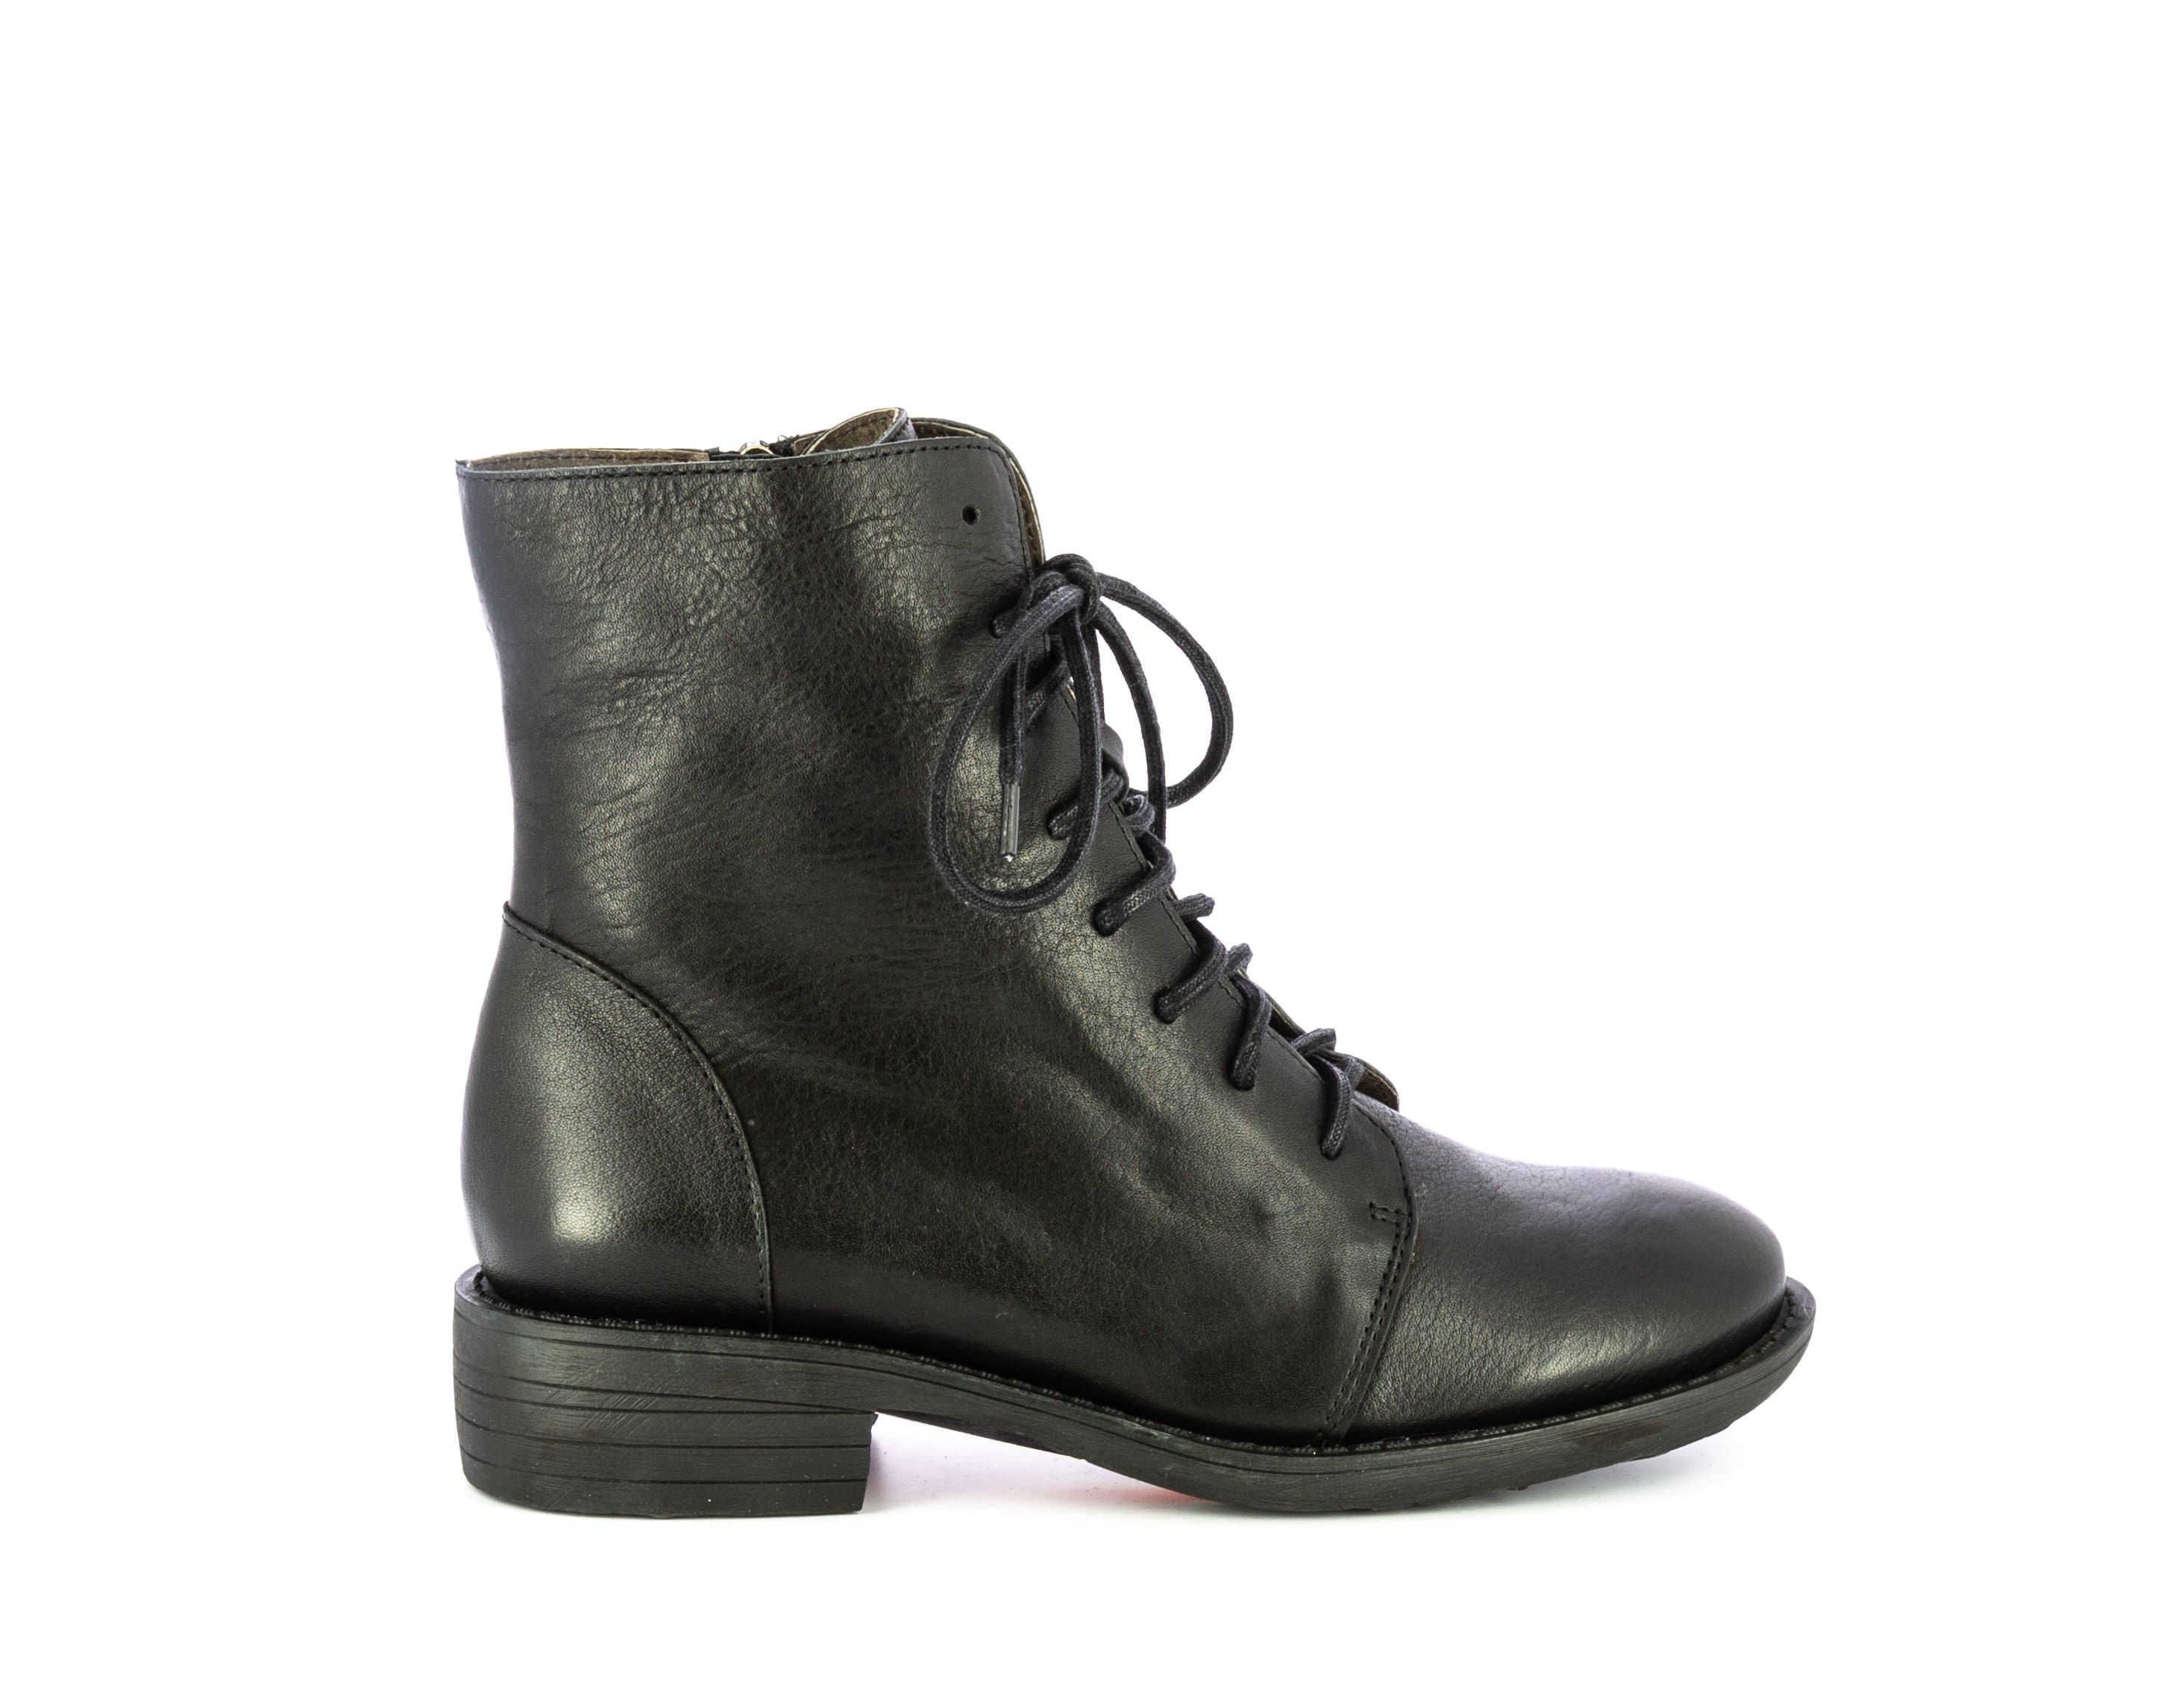 IDCALIAO 03 - 35 / Black - Boots